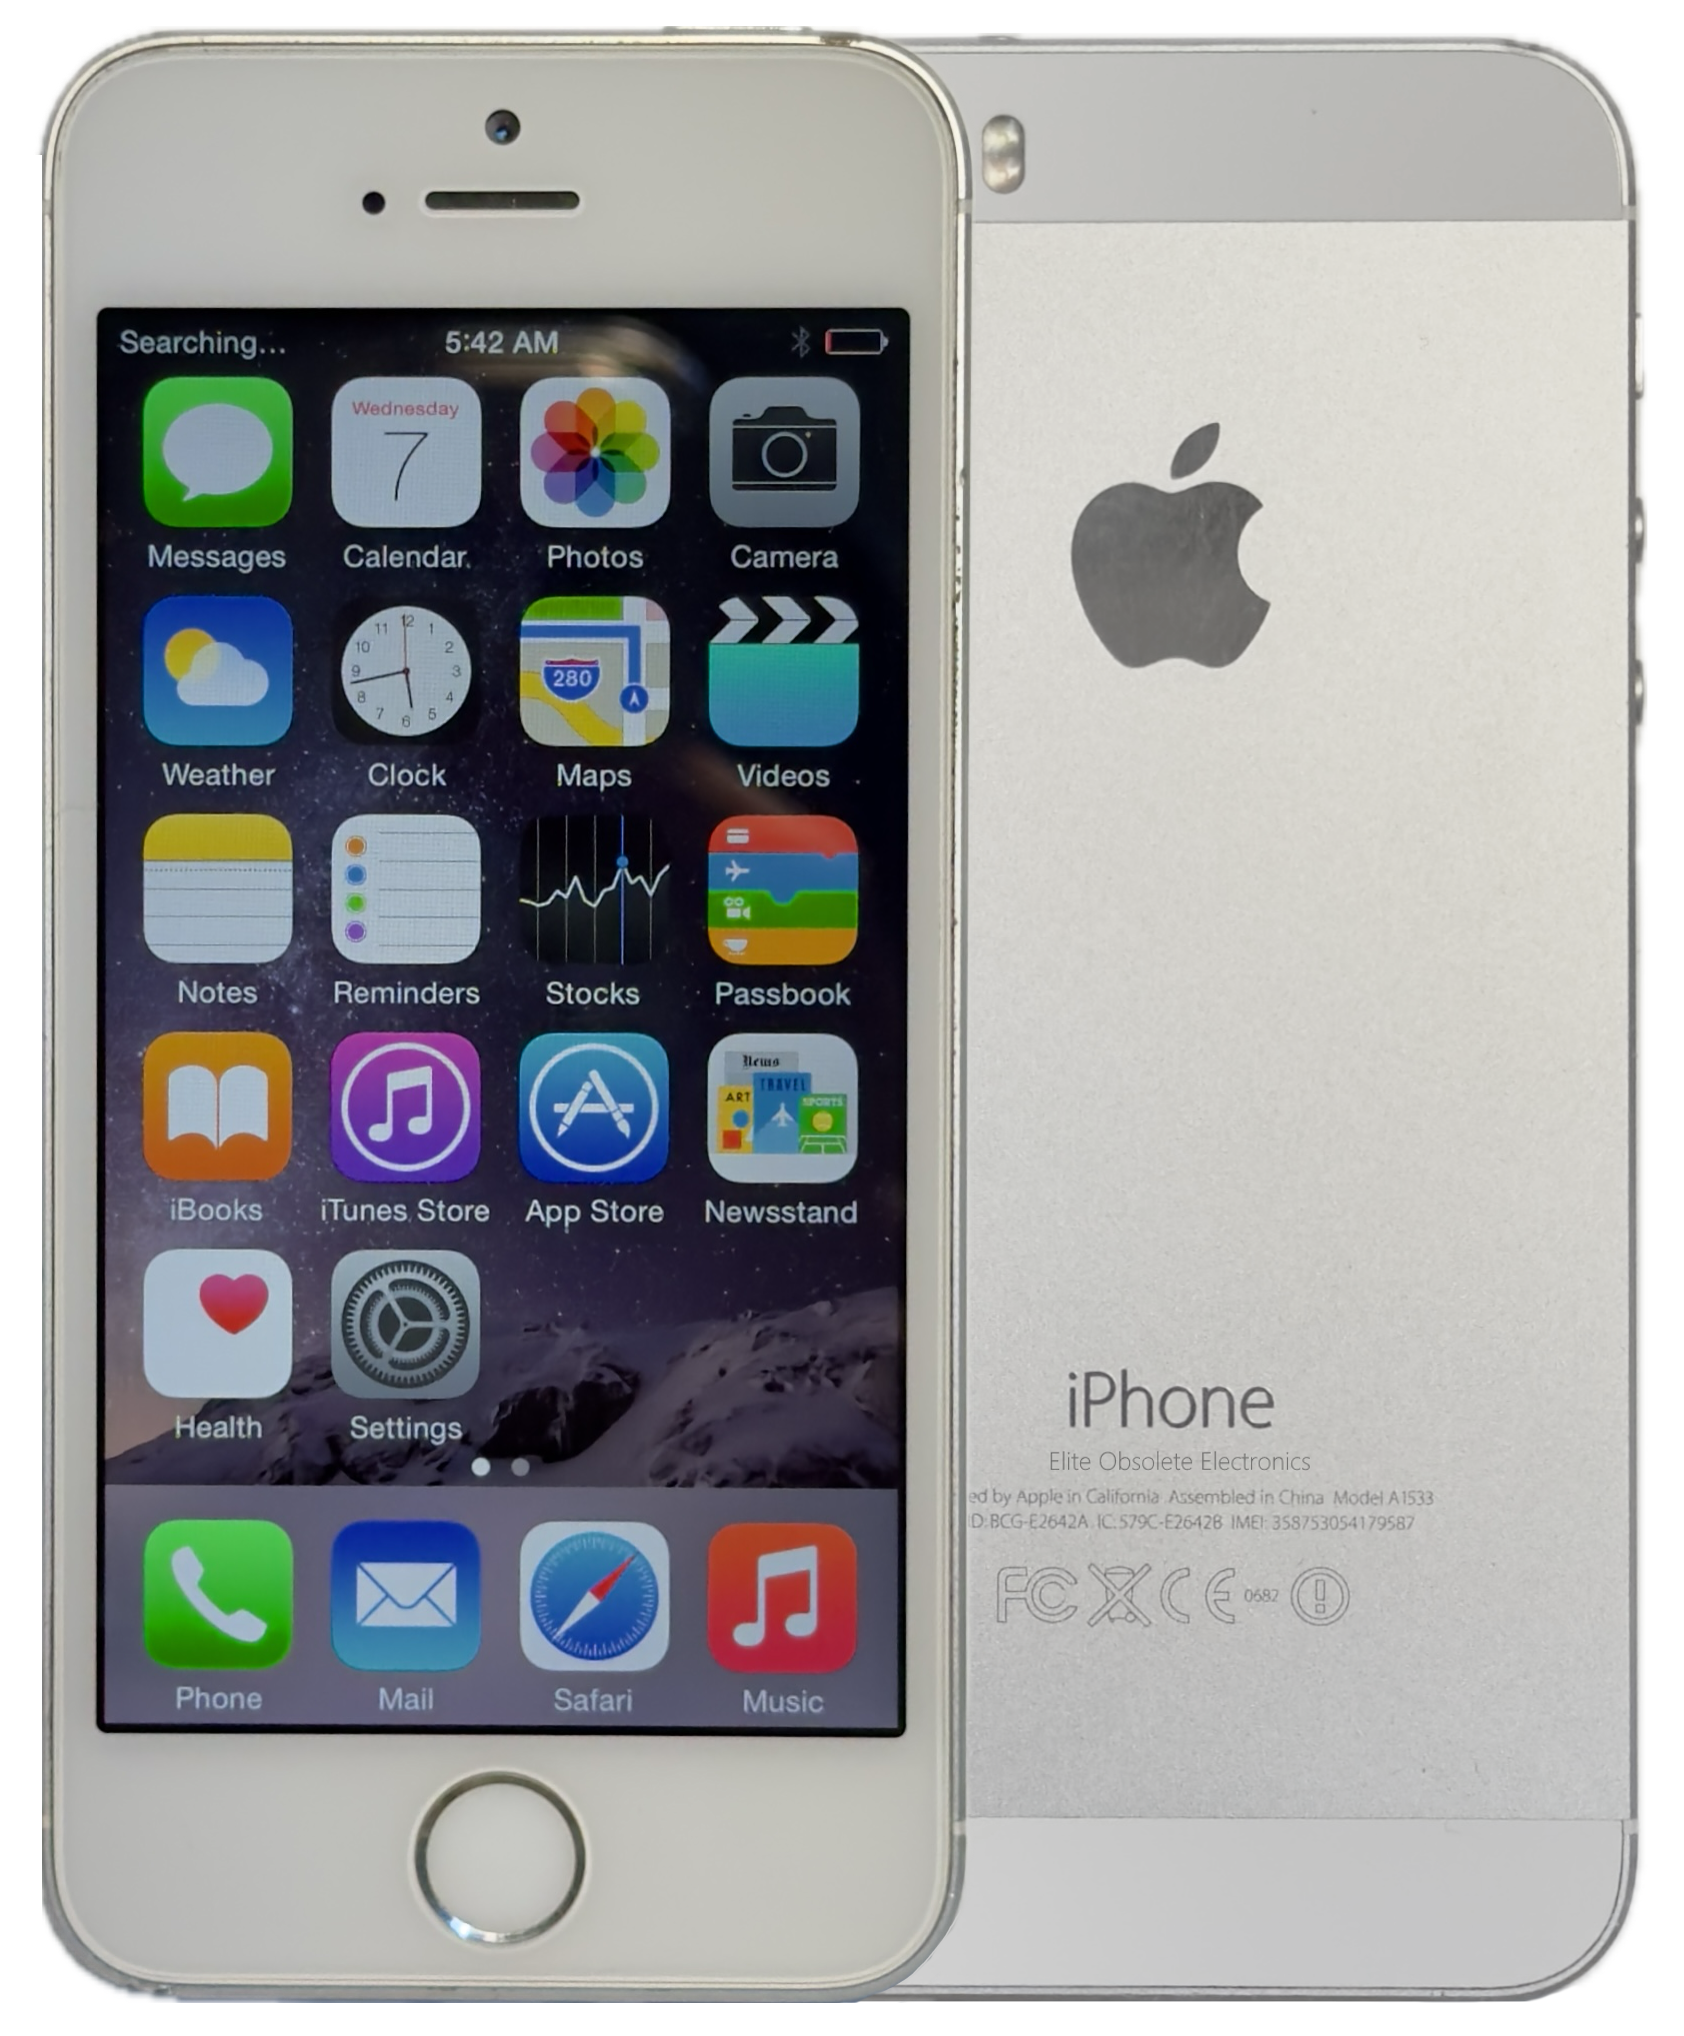 Refurbished Apple iPhone 5s 16GB Silver White Rare iOS 8.3 Verizon Unlocked ME342LL/A New Battery